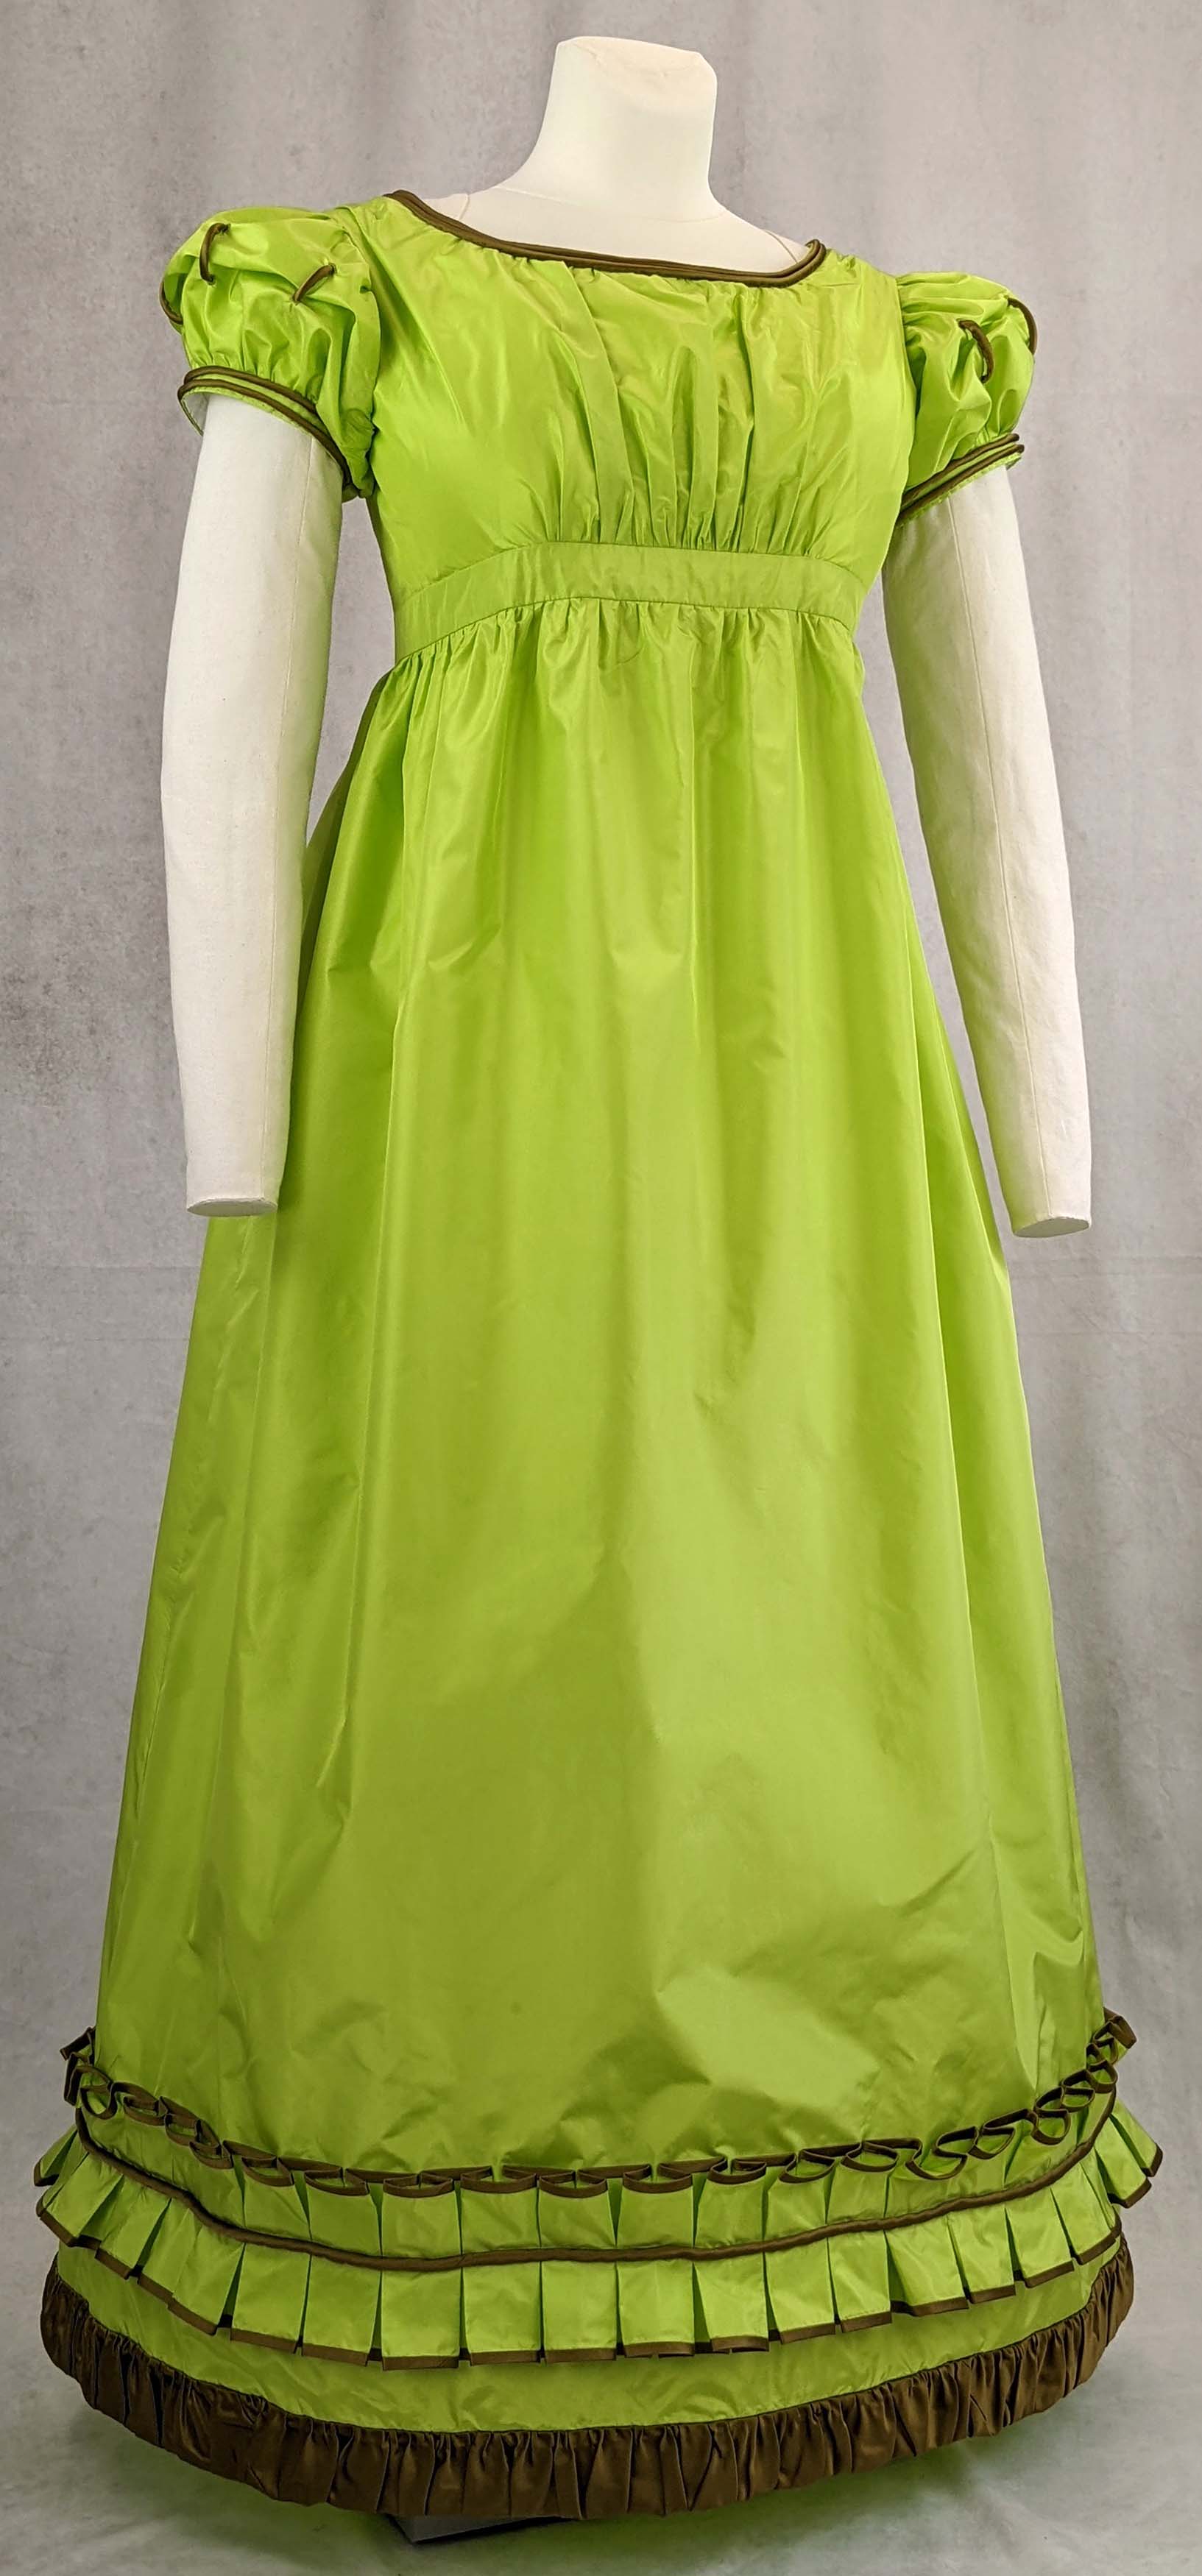 Empire / Regency evening dress 1810to 1815 Sewing Pattern #0422 Size US 8-30 (EU 34-56)